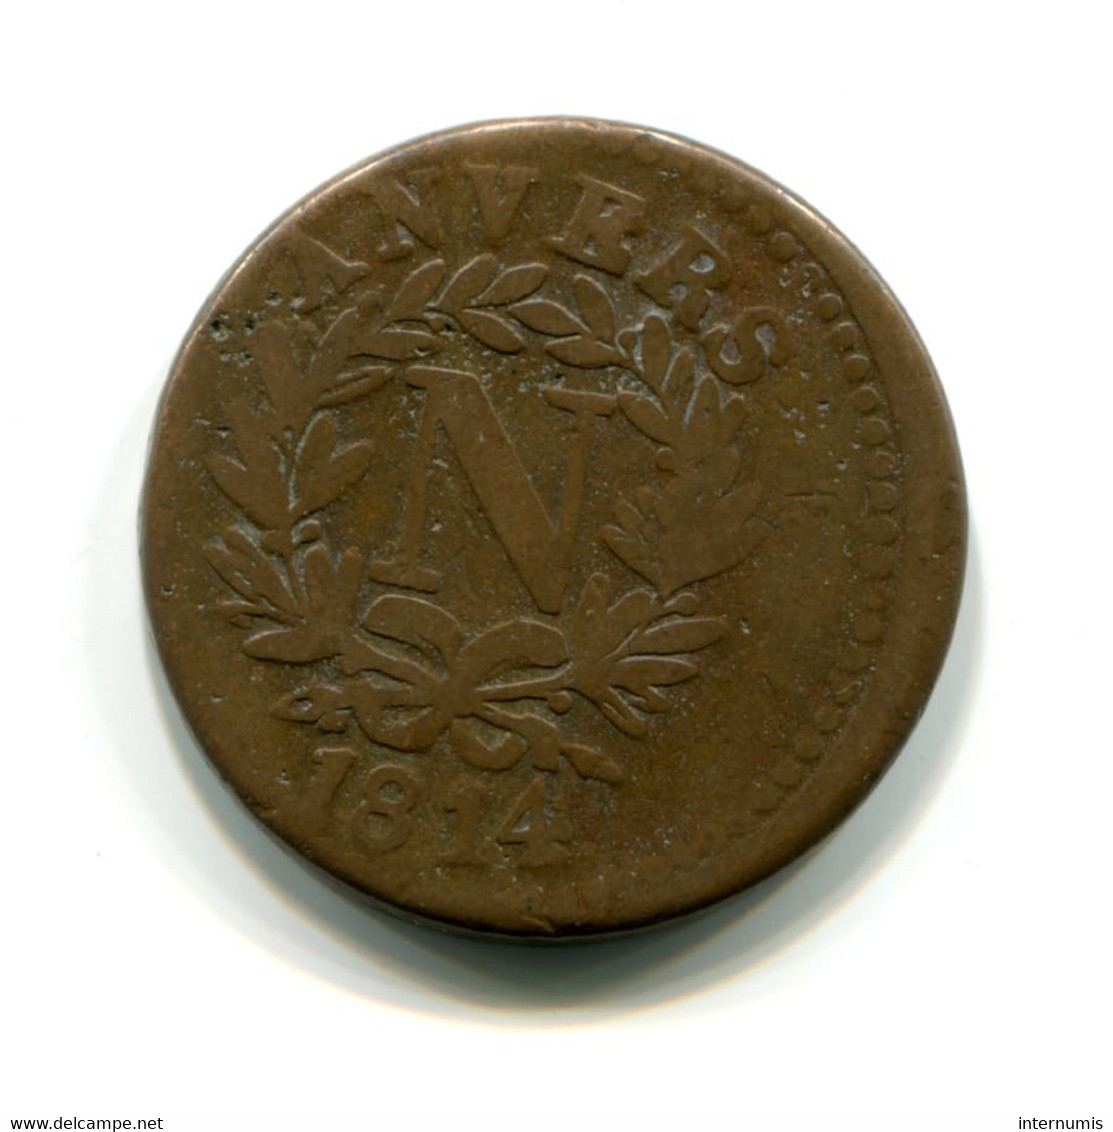 Belgique / Belgium, 5 Centimes, 1814, Siege D'Anvers - Napoléon, Bronze, ,KM#2, F.115?, G.129d, COL.11 - 1814 Belagerung Von Antwerpen